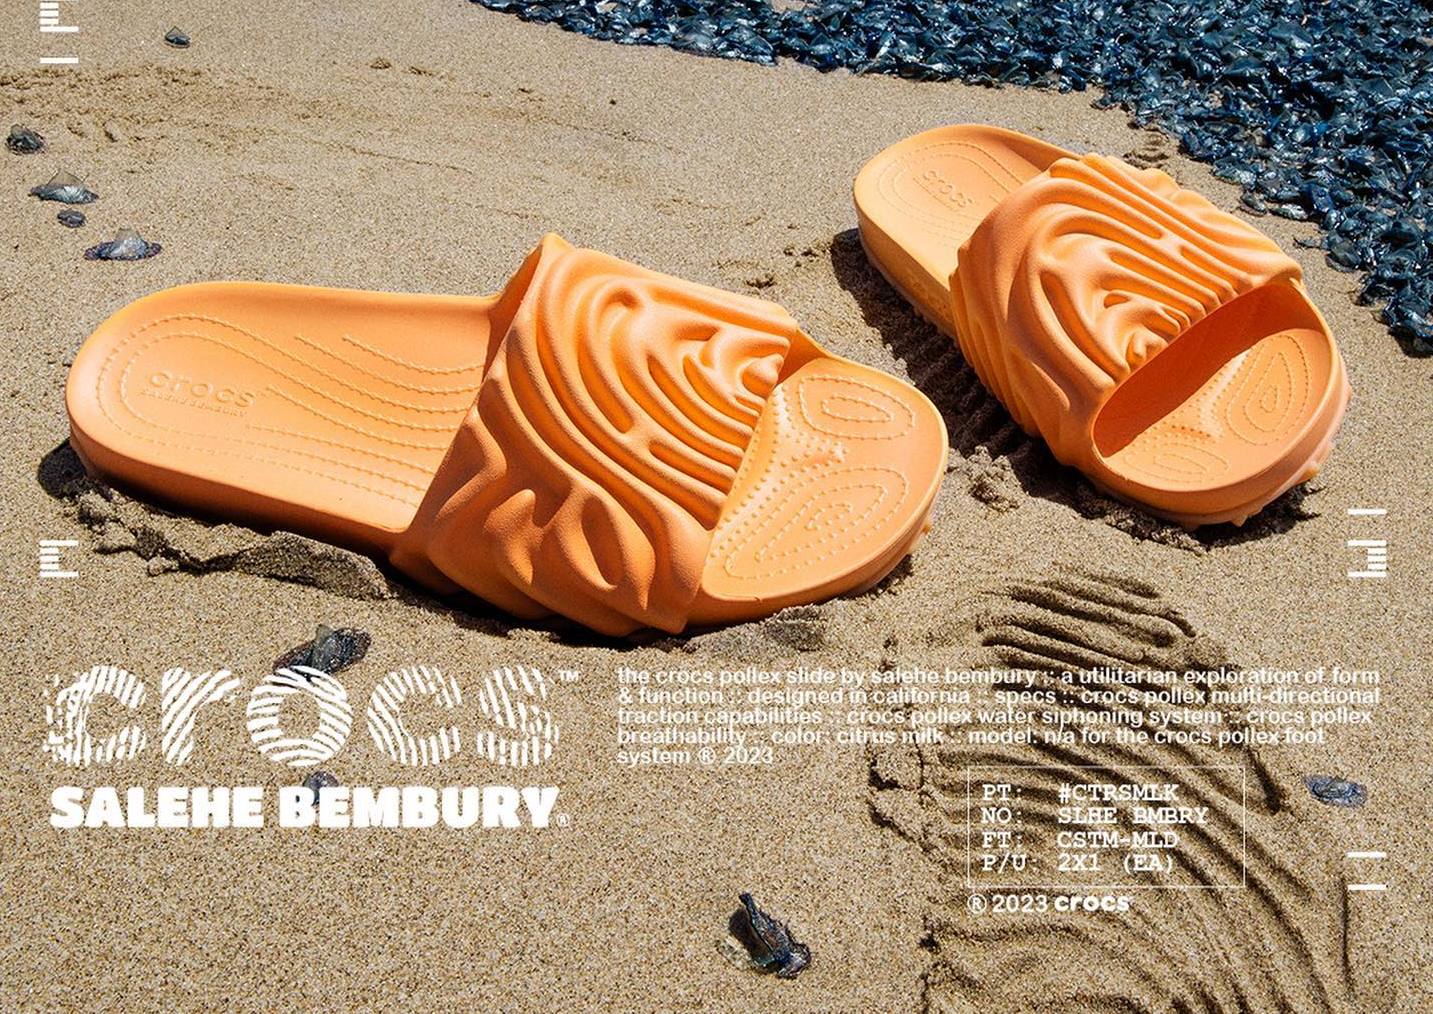 Salehe Bembury's Crocs Pollex Slide Debuts This Month | Complex